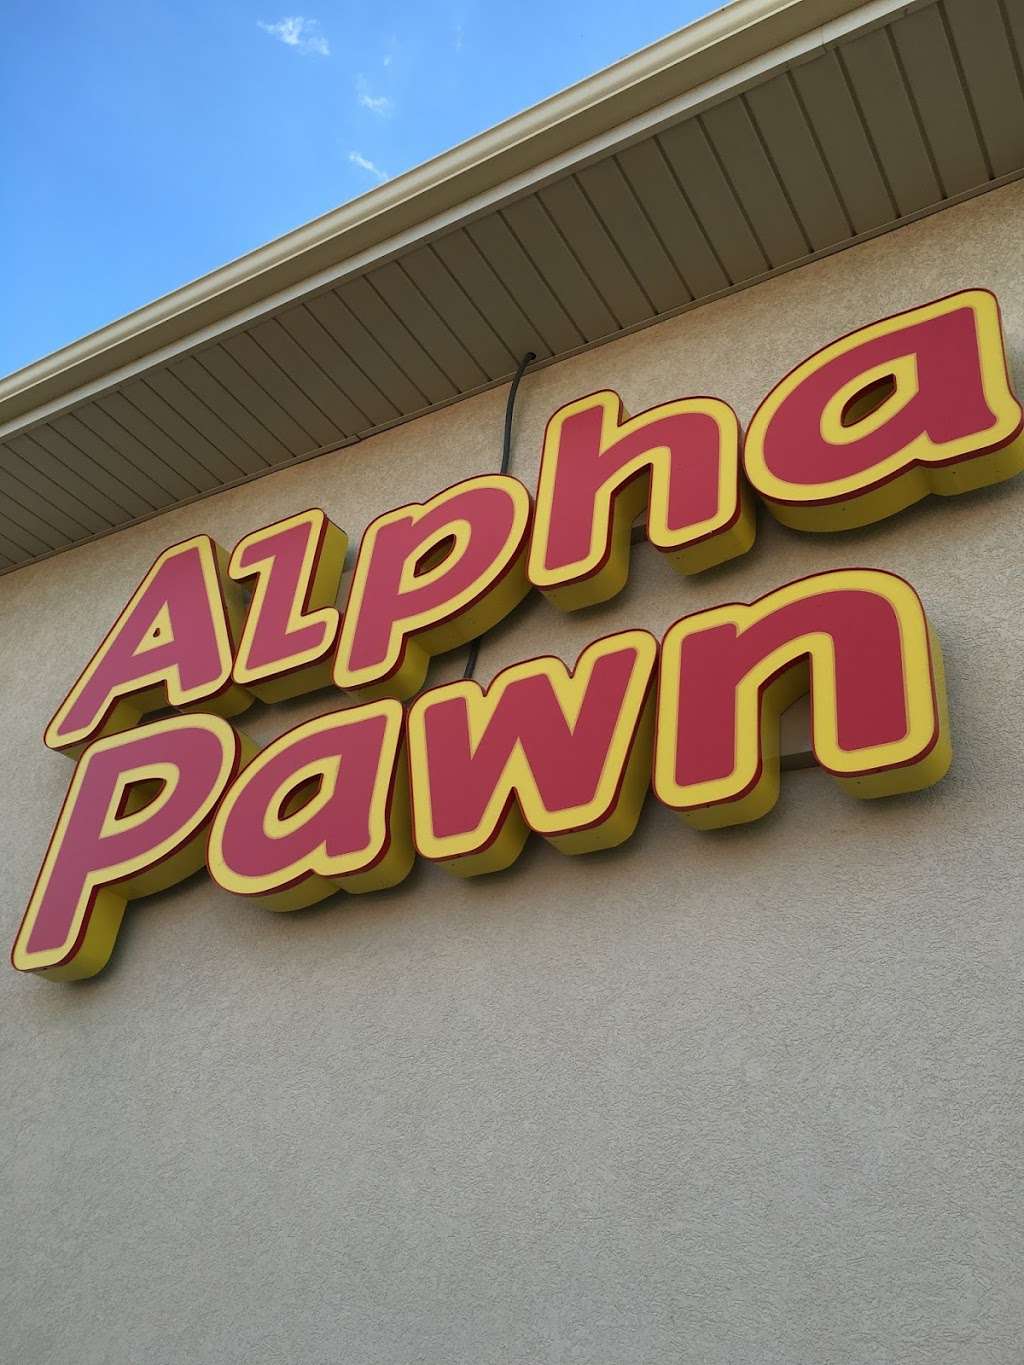 Alpha Pawn & Jewelry | 14501 E US Hwy 40, Kansas City, MO 64136 | Phone: (816) 492-3833